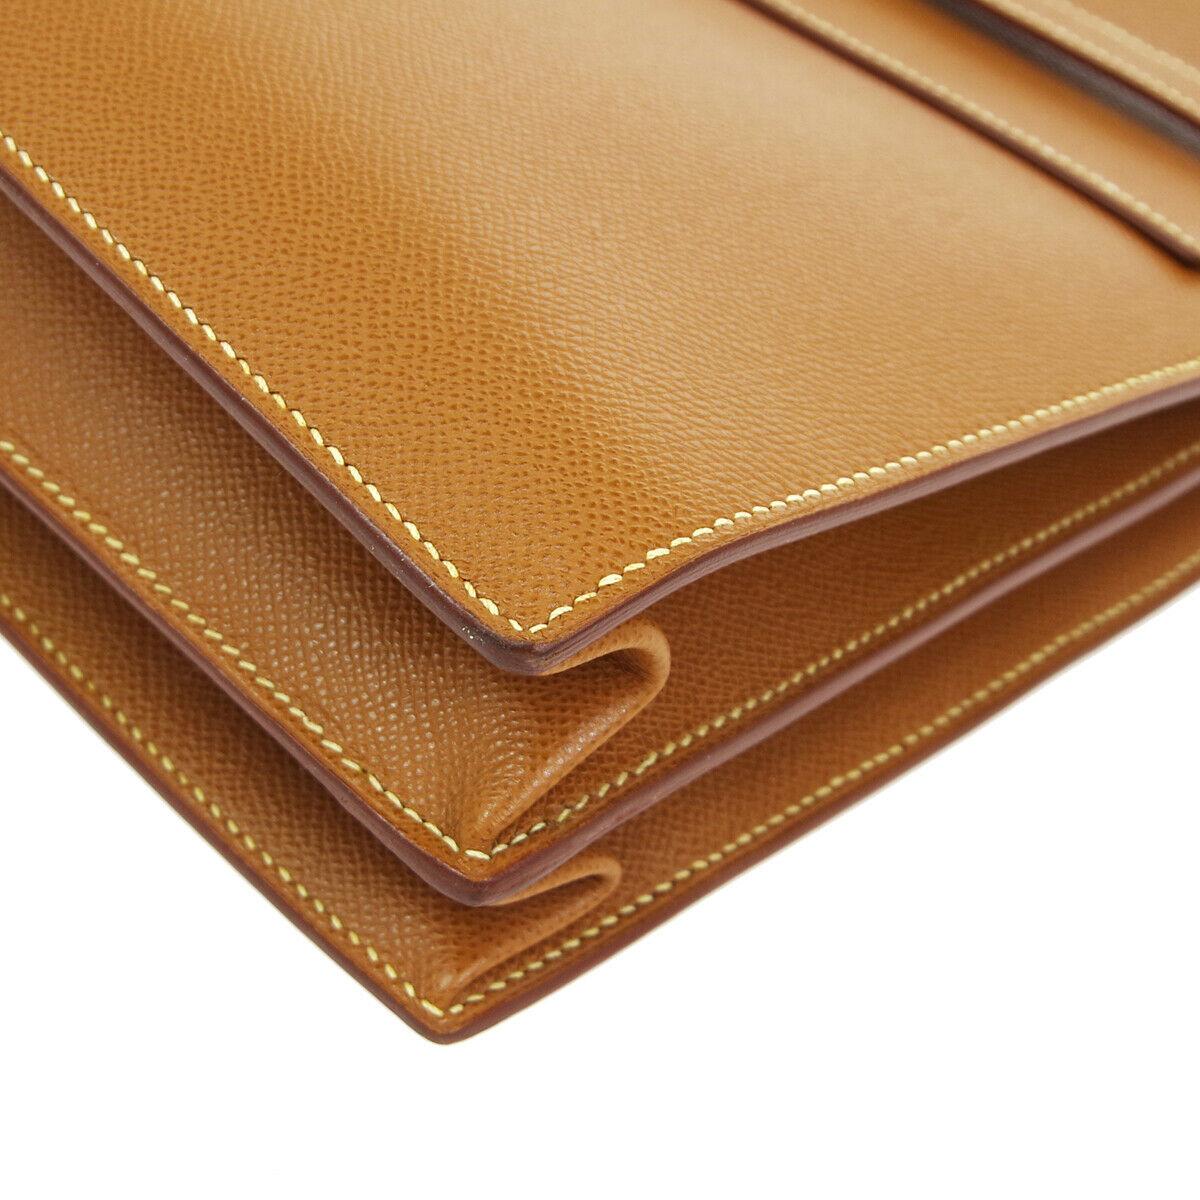 Brown Hermes Cognac Leather Gold Men's Handle Satchel Business Travel Briefcase Bag